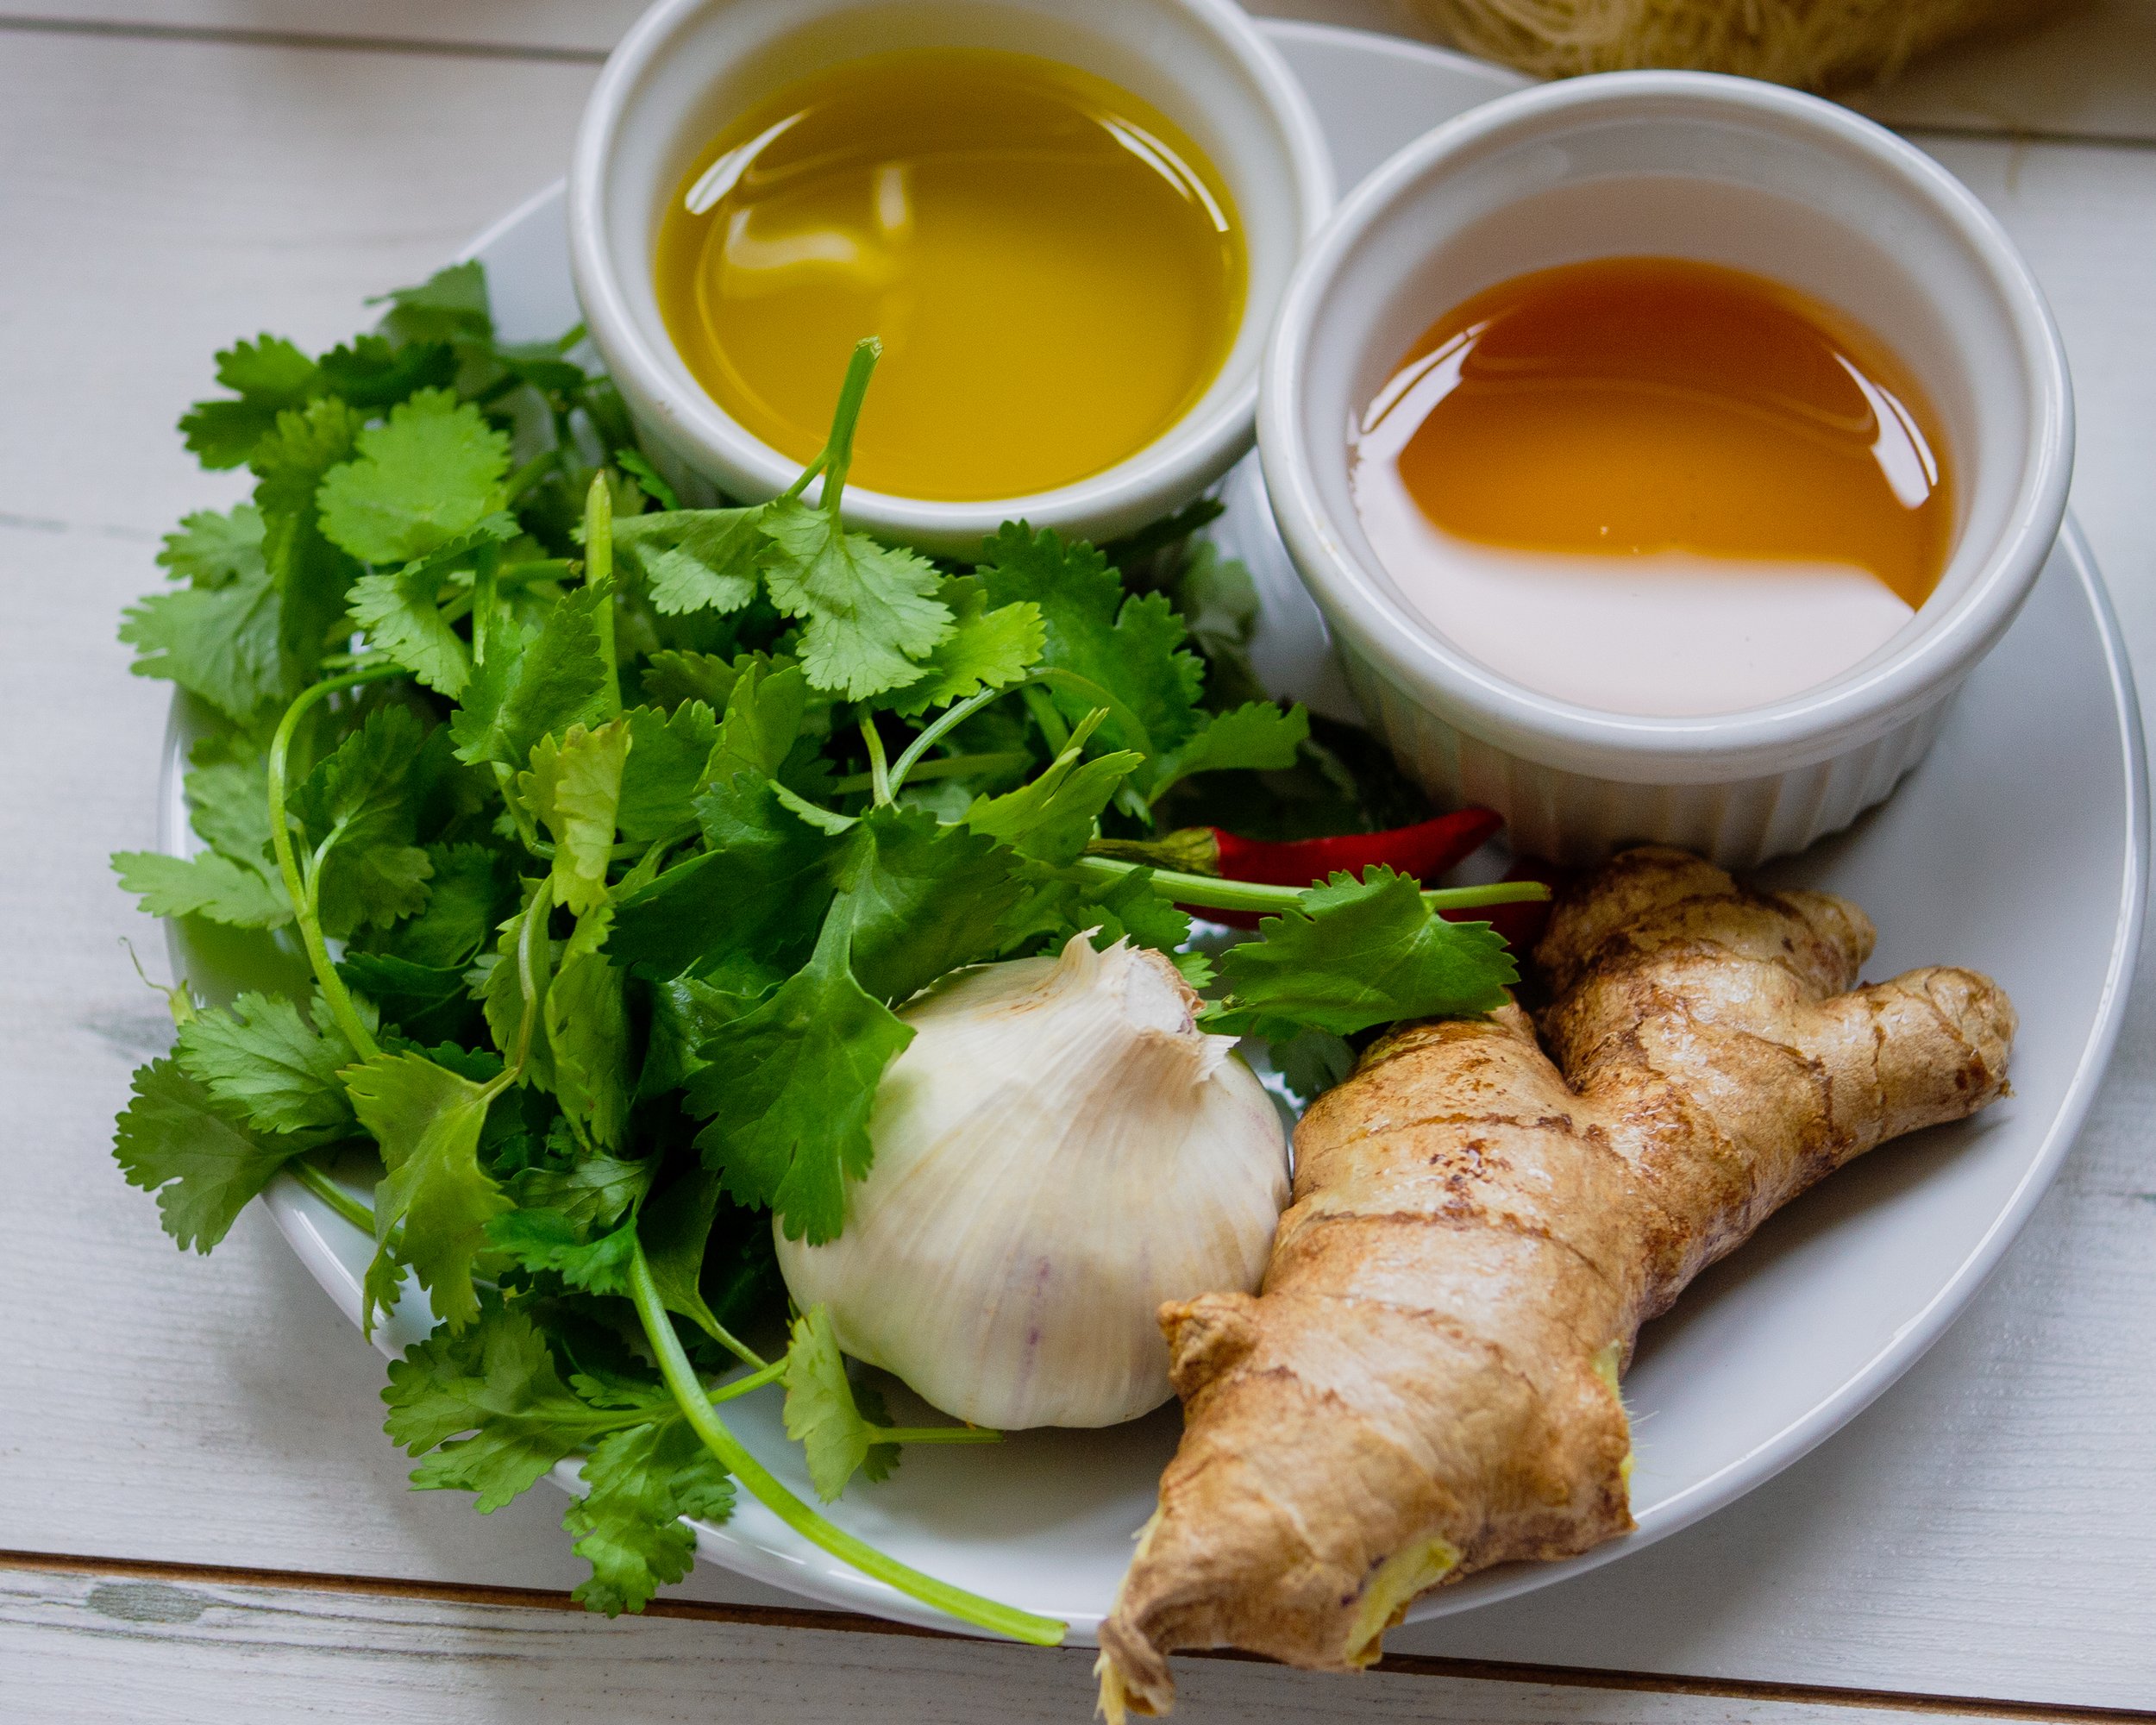 Asian salad dressing recipe by kam sokhi allergy chef